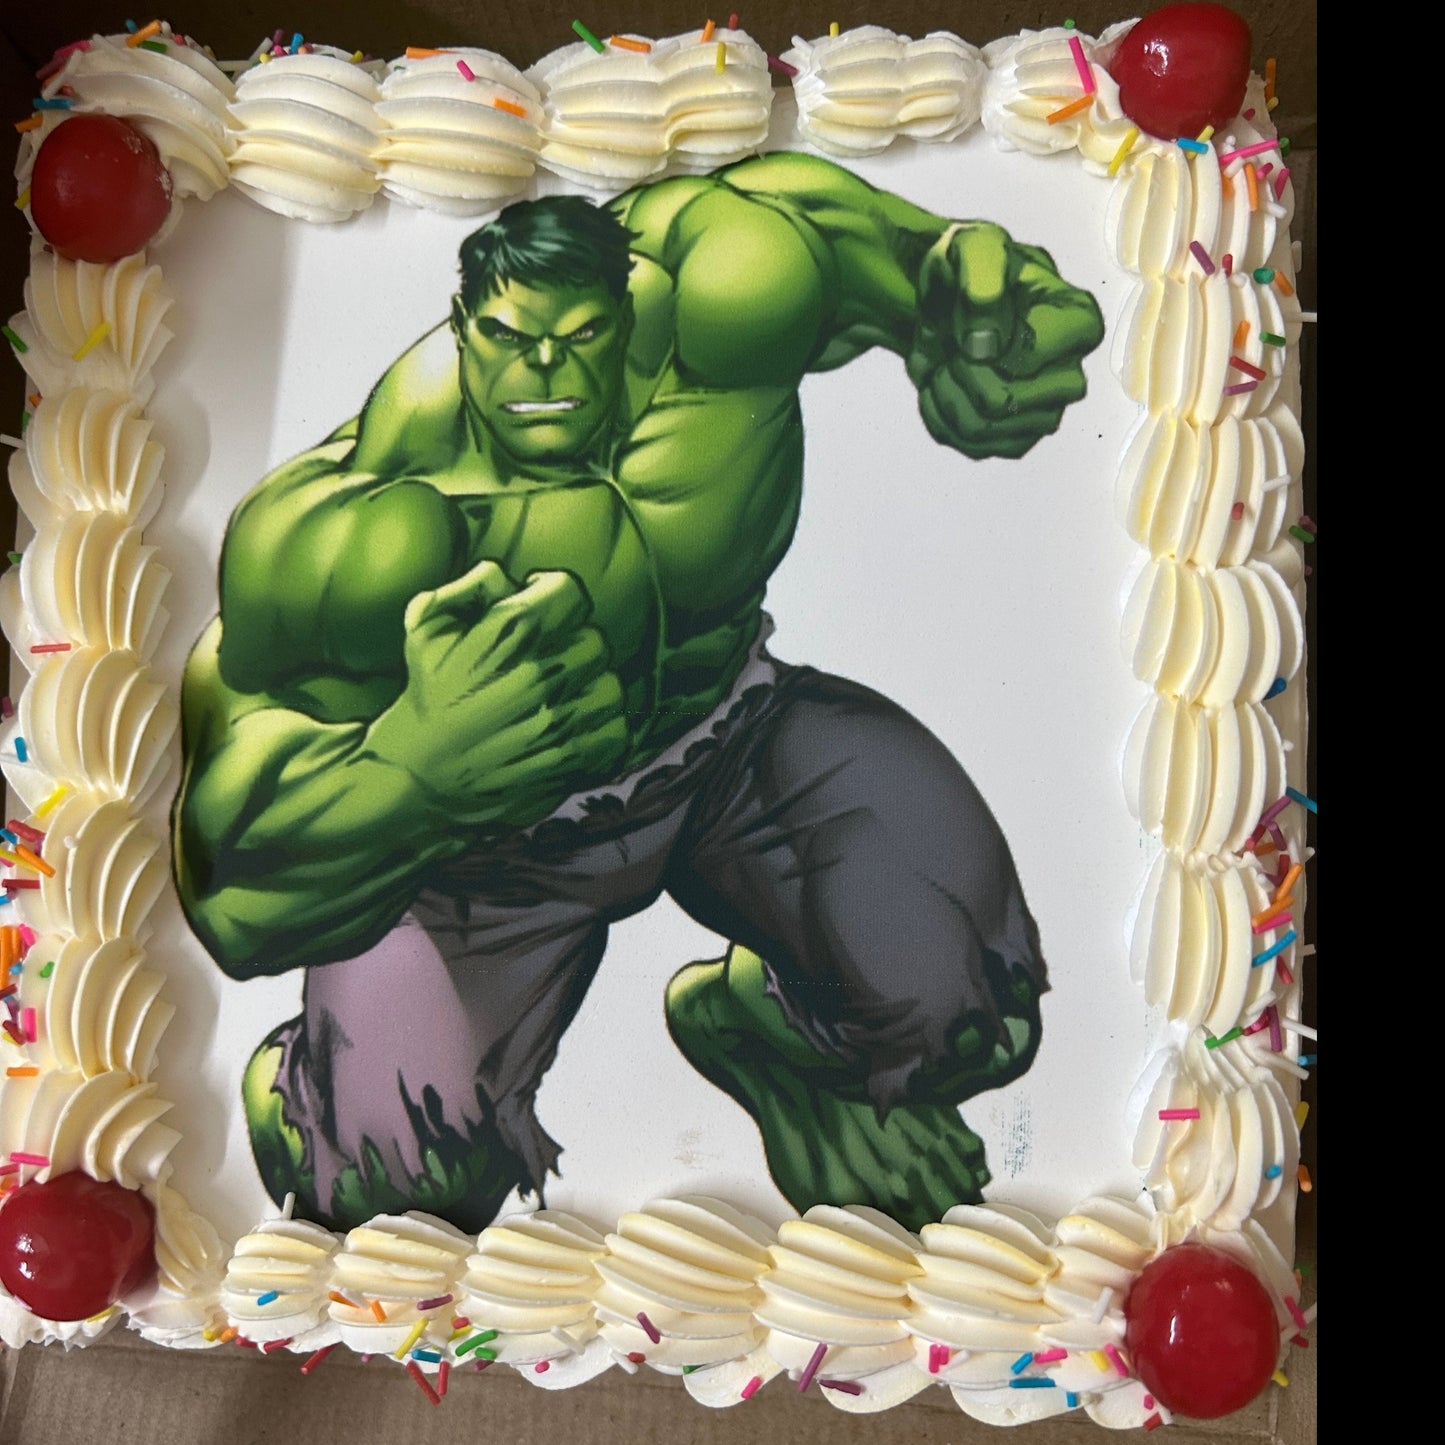 Hulk Photo Cake